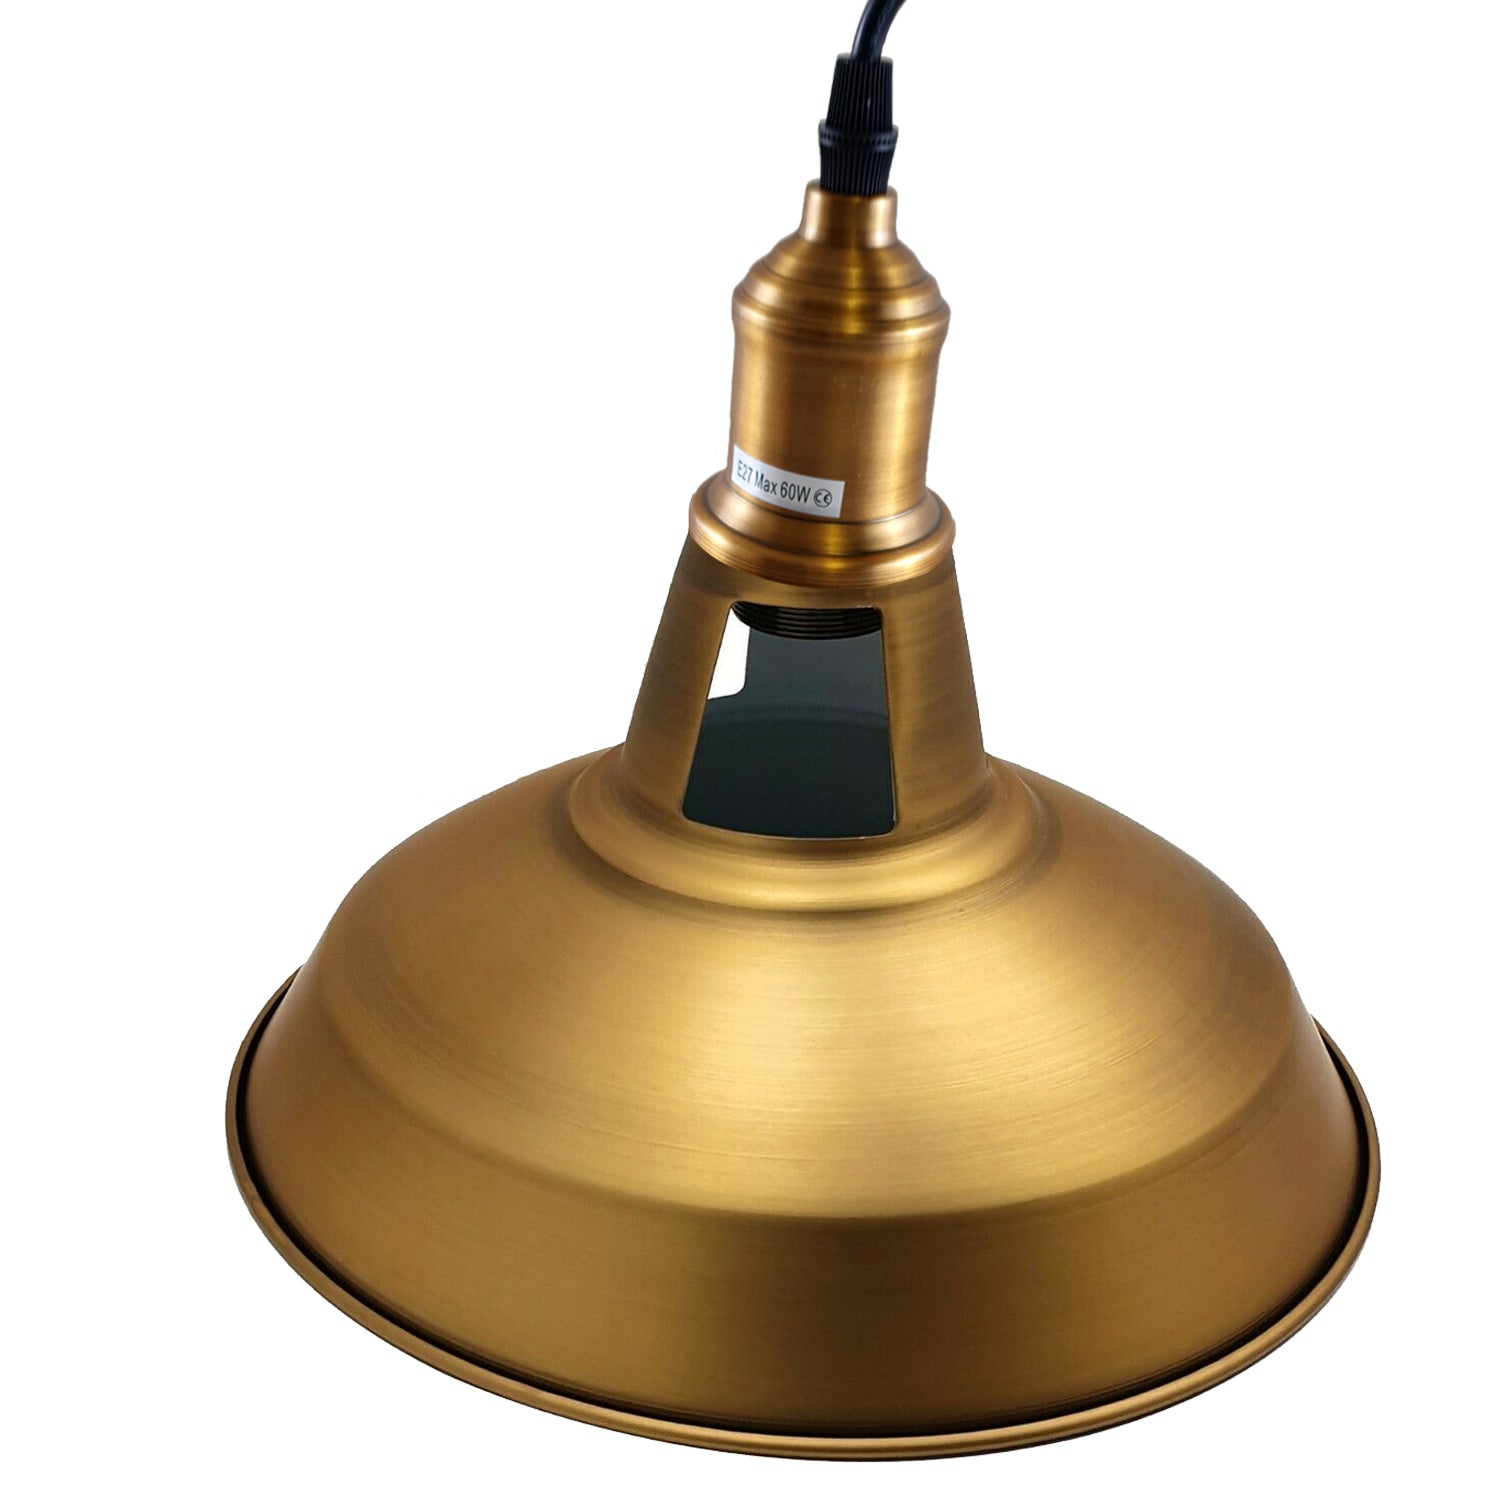 2 x Yellow Brass Metal Ceiling Lamp Shade Pendant Light~1476 - LEDSone UK Ltd